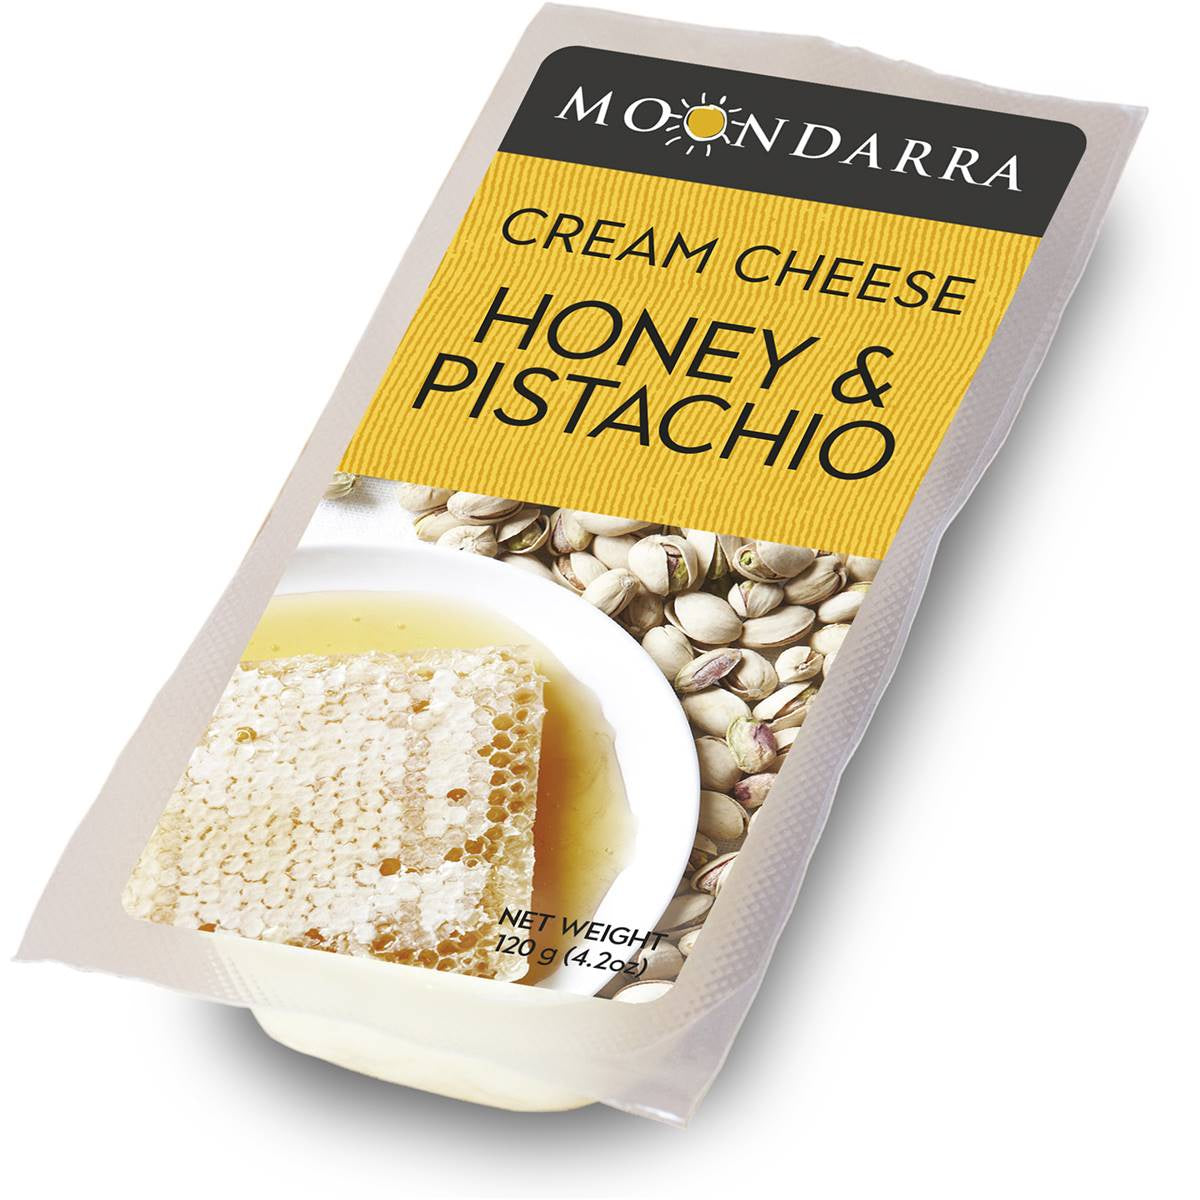 Moondarra Cream Cheese Honey and Pistachio 120g